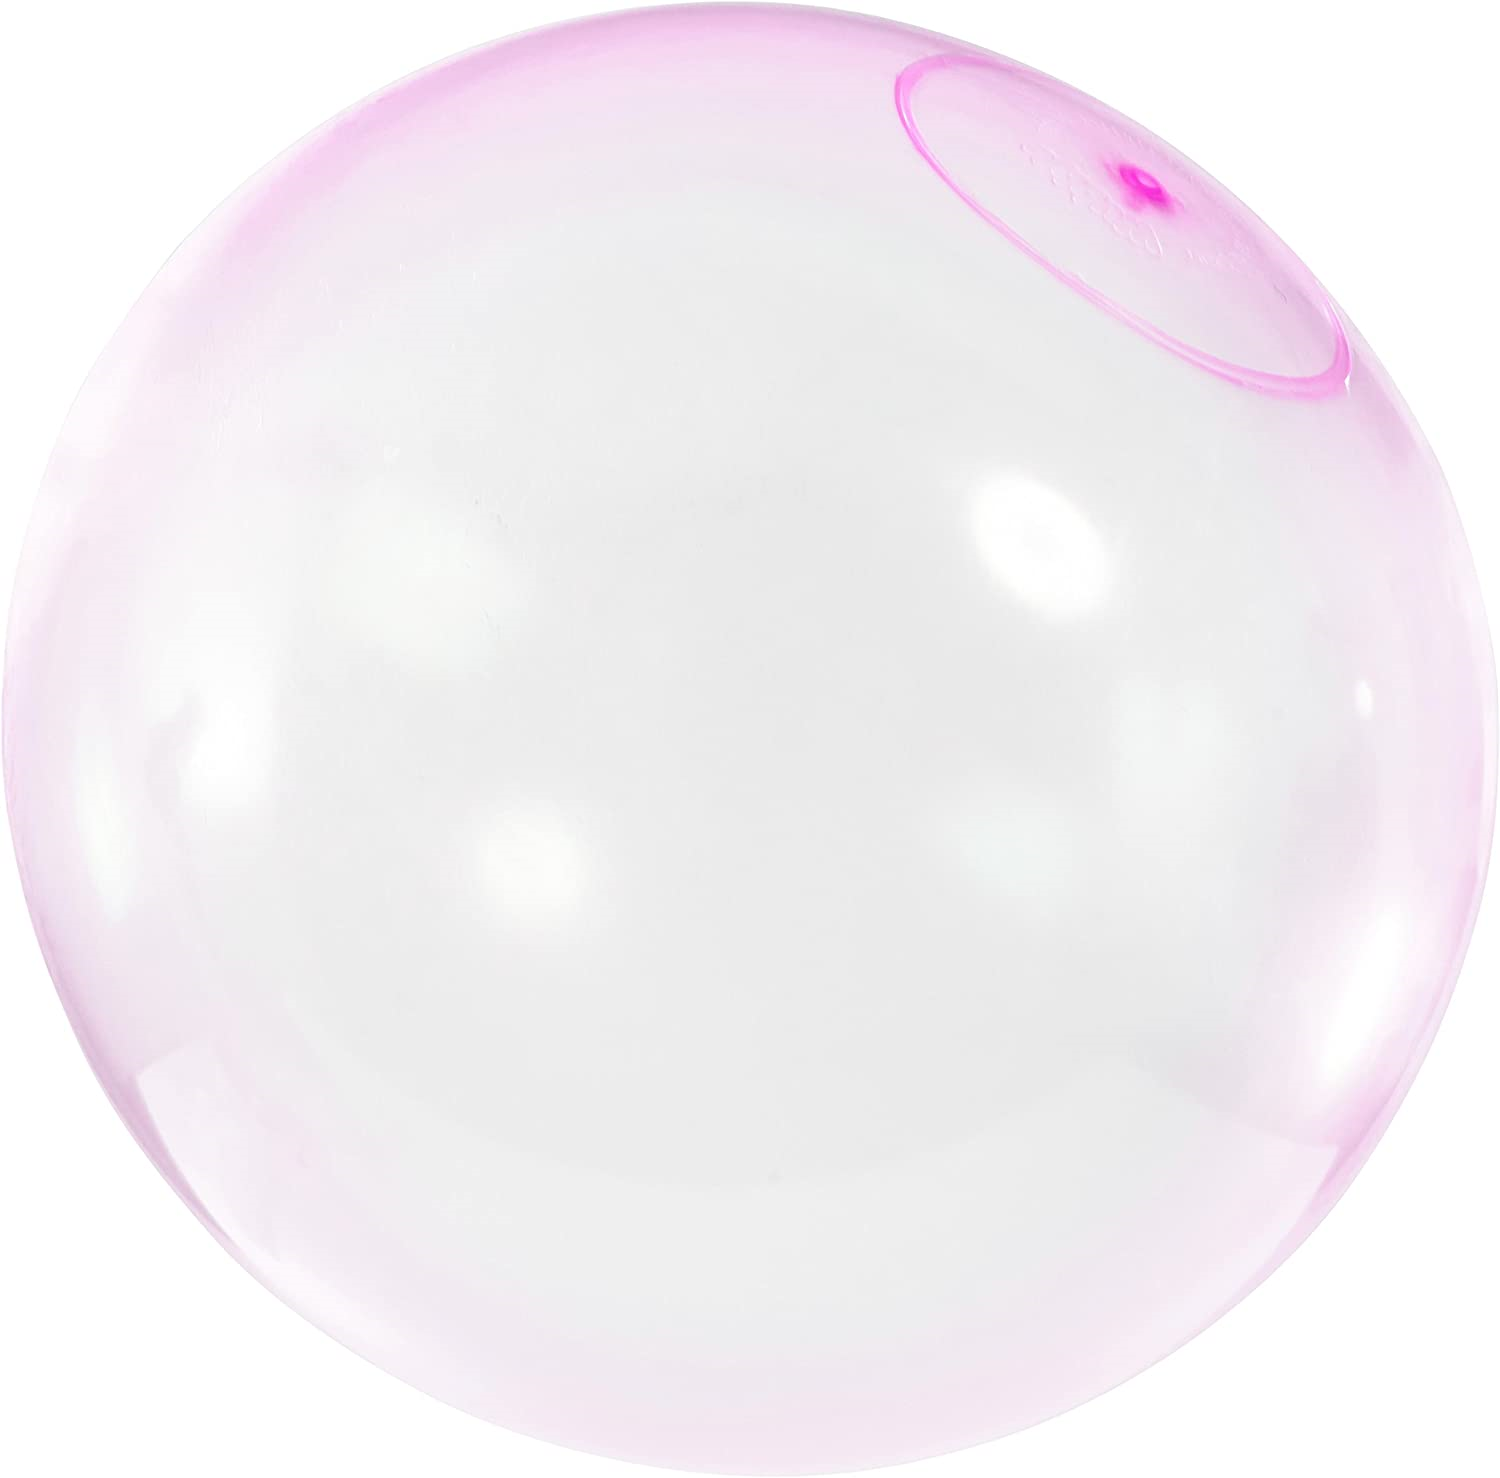 Super Wubble Bubble Ball Pink